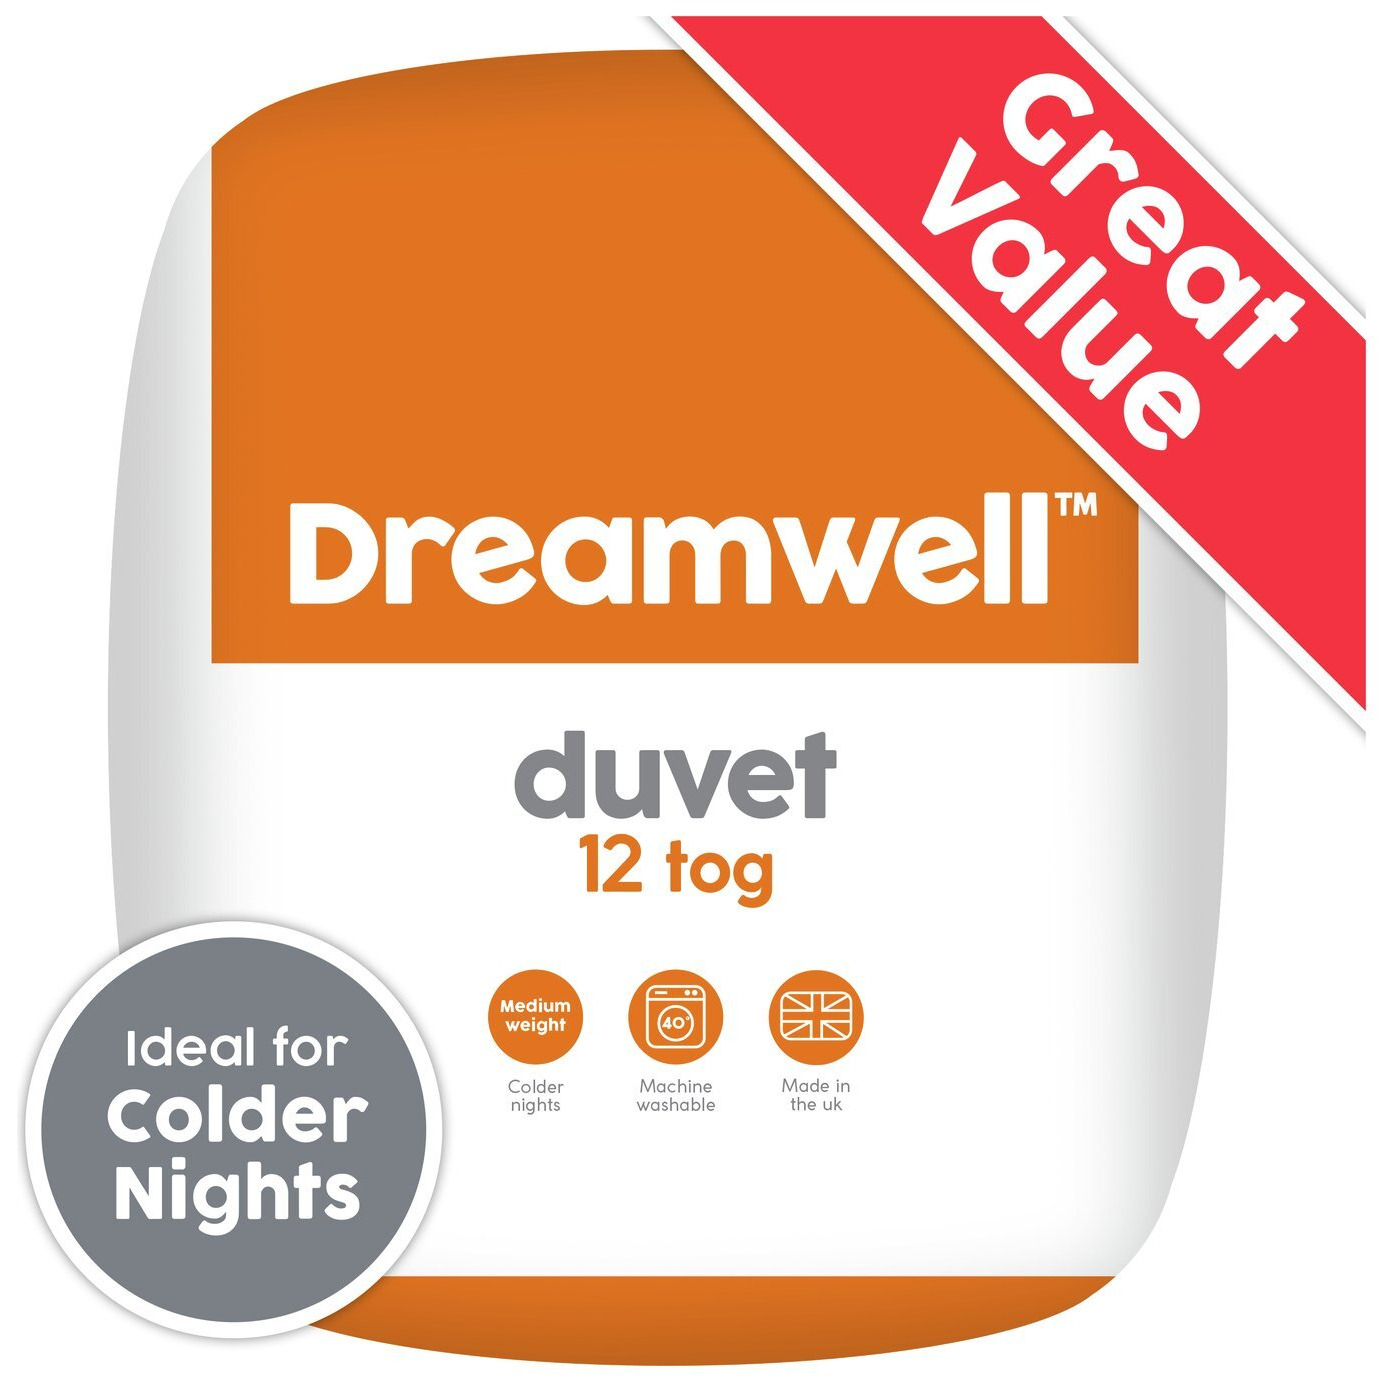 Dreamwell Colder Nights Medium Weight 12 Tog Duvet - Single - image 1